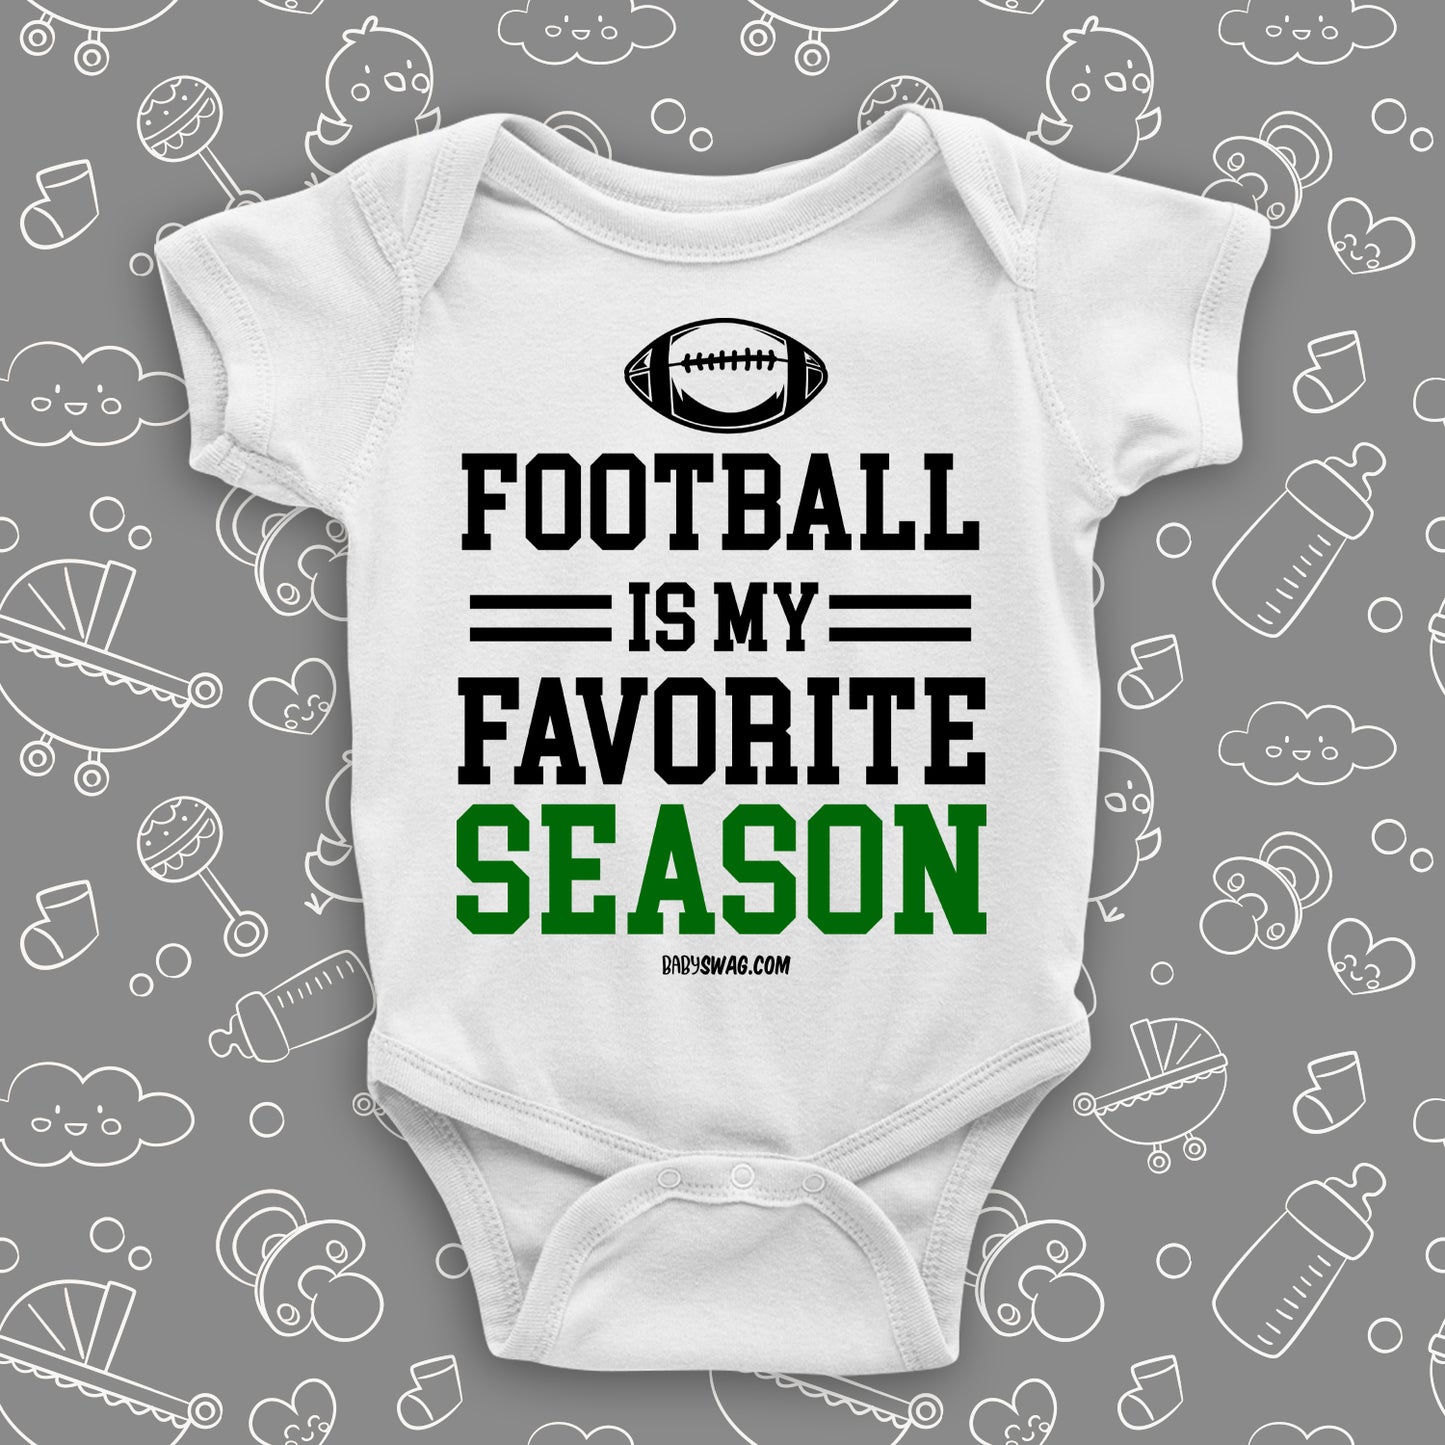 White cool baby boy onesie with print "Football is my favorite season".